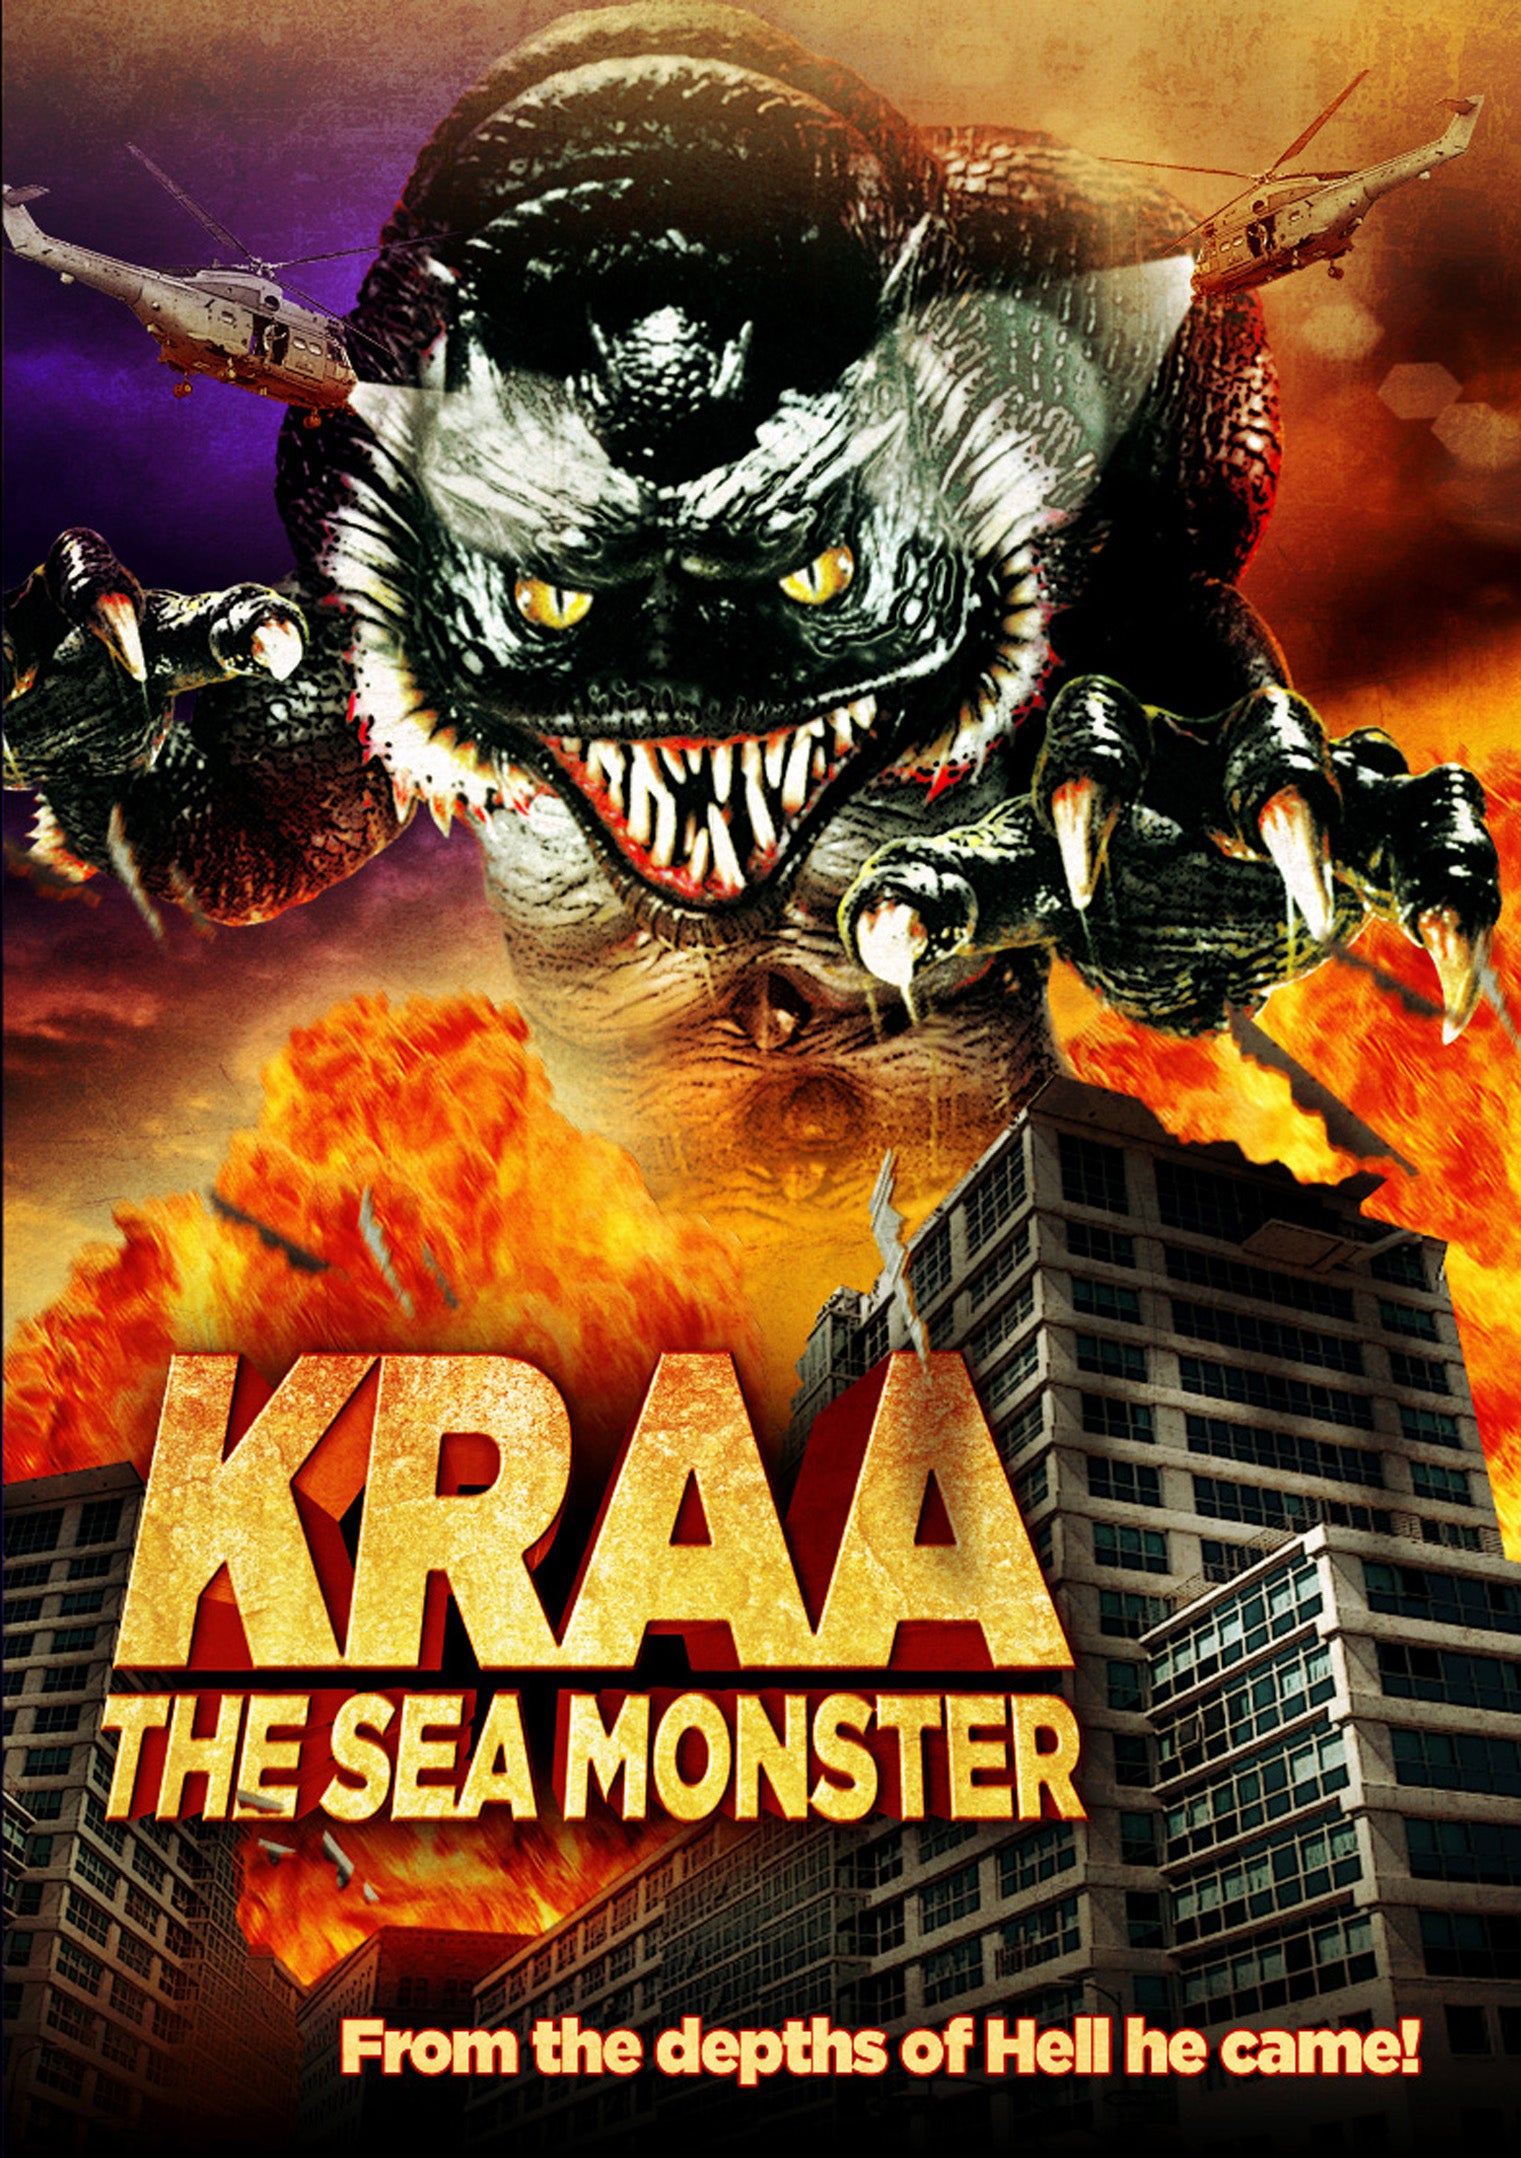 KRAA! THE SEA MONSTER DVD